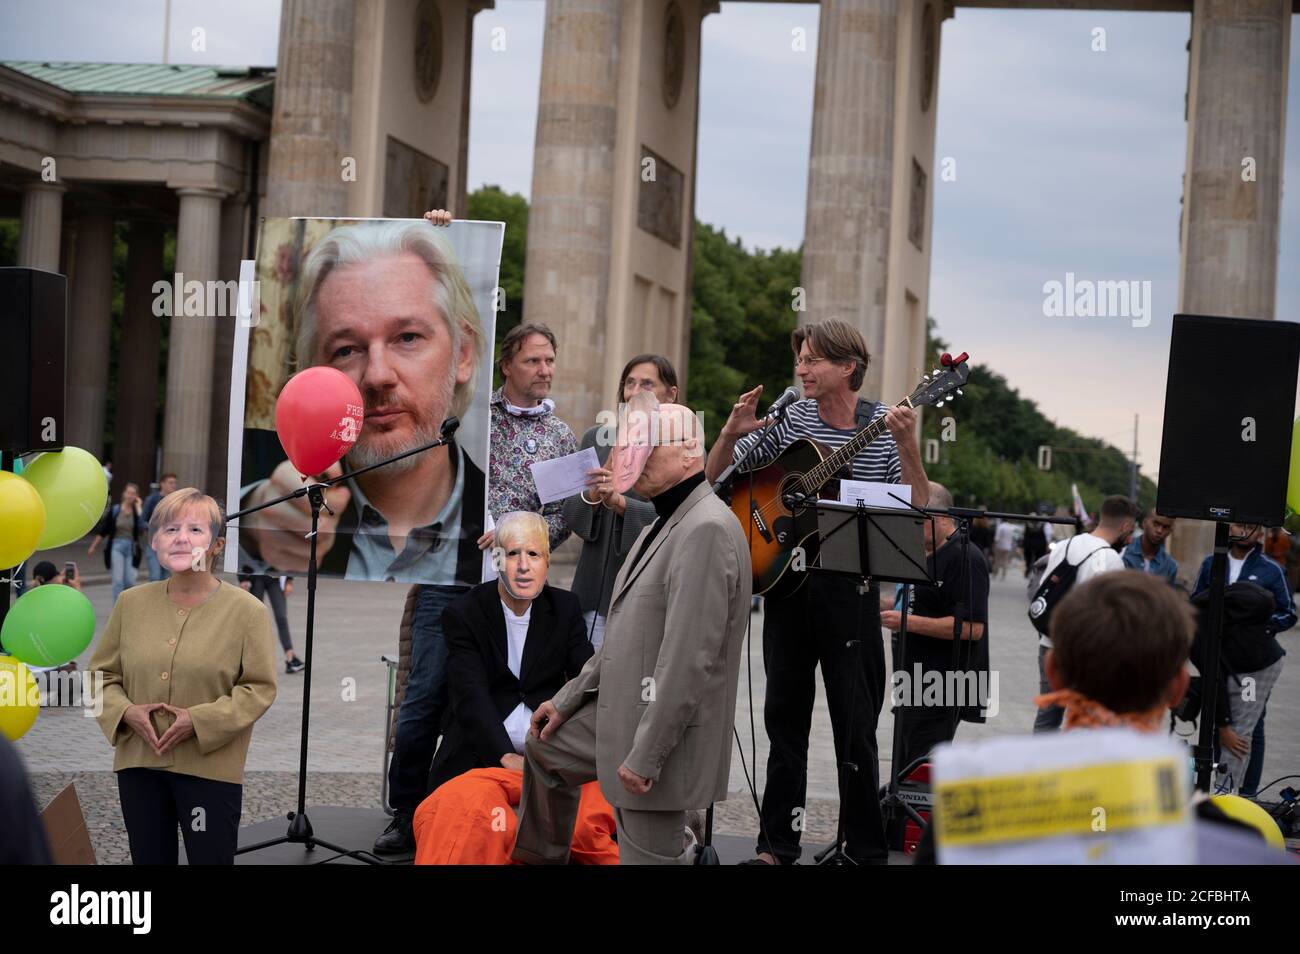 03/09/2020 - Berlin Germany - Julian Assange Anti Imprisonment Demonstration in the front of Brandenburg Gate Stock Photo